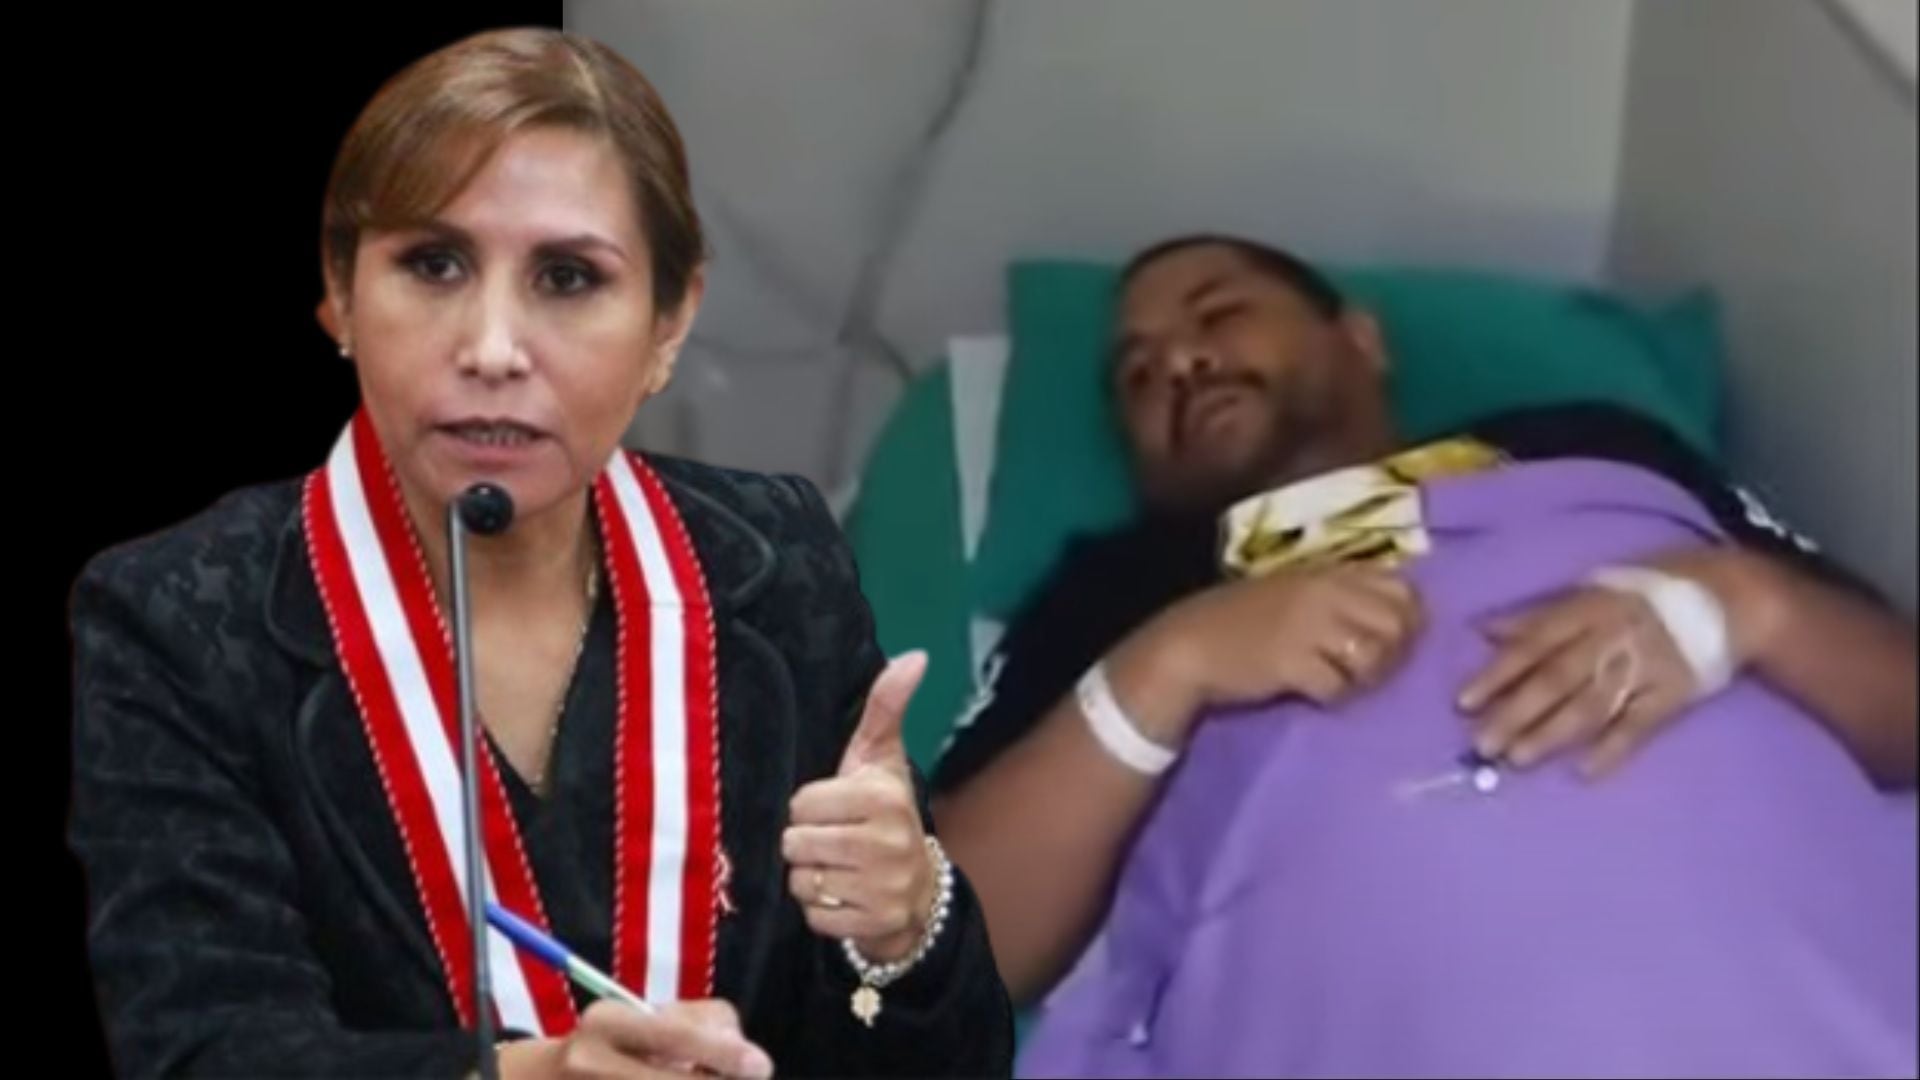 Patricia Benavides ordenó a Jaime Villanueva internarse en la clínica antes de ser detenido, según su testimonio| Andina